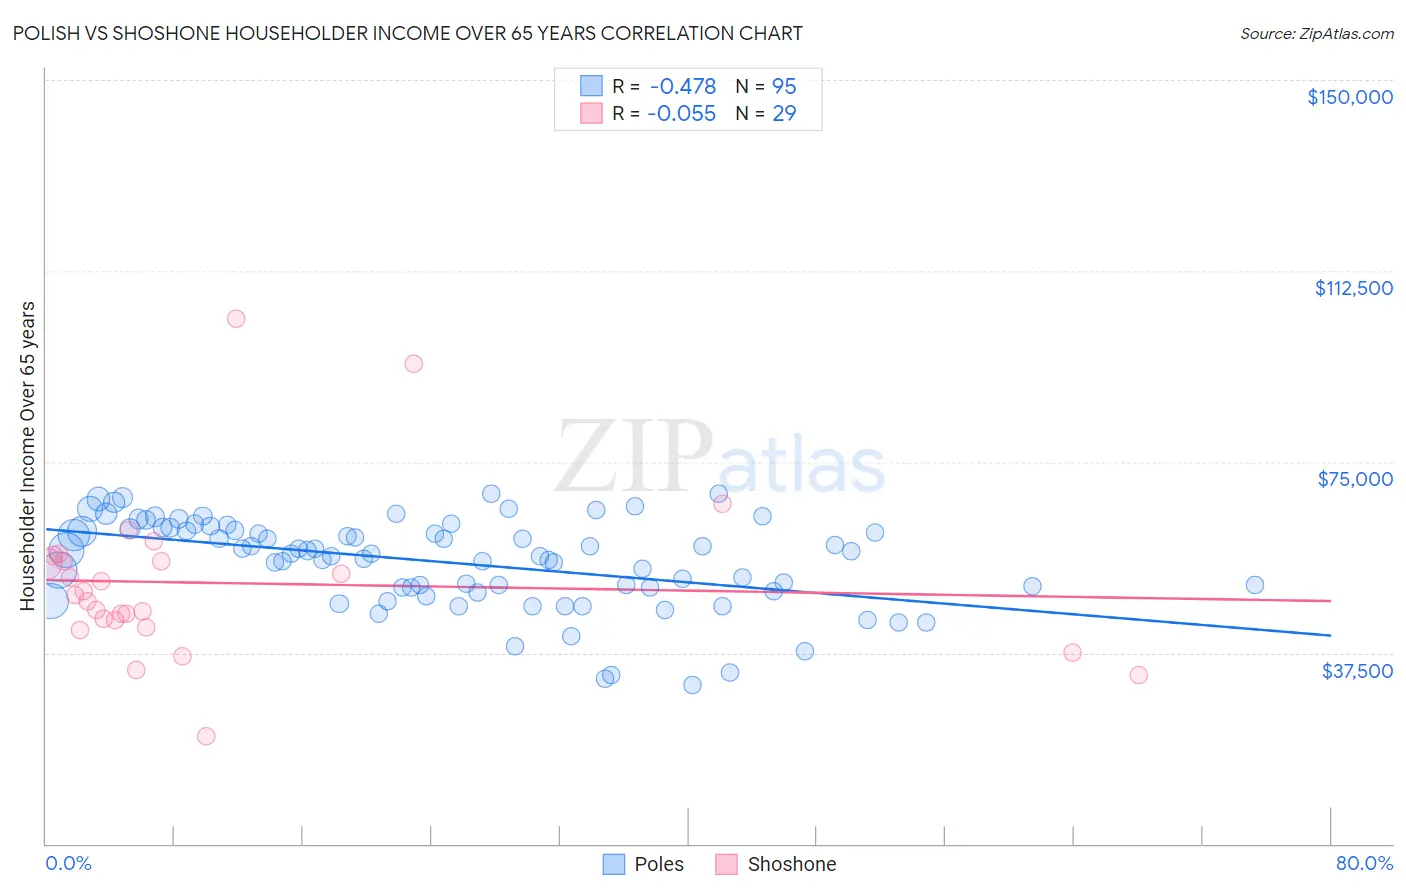 Polish vs Shoshone Householder Income Over 65 years